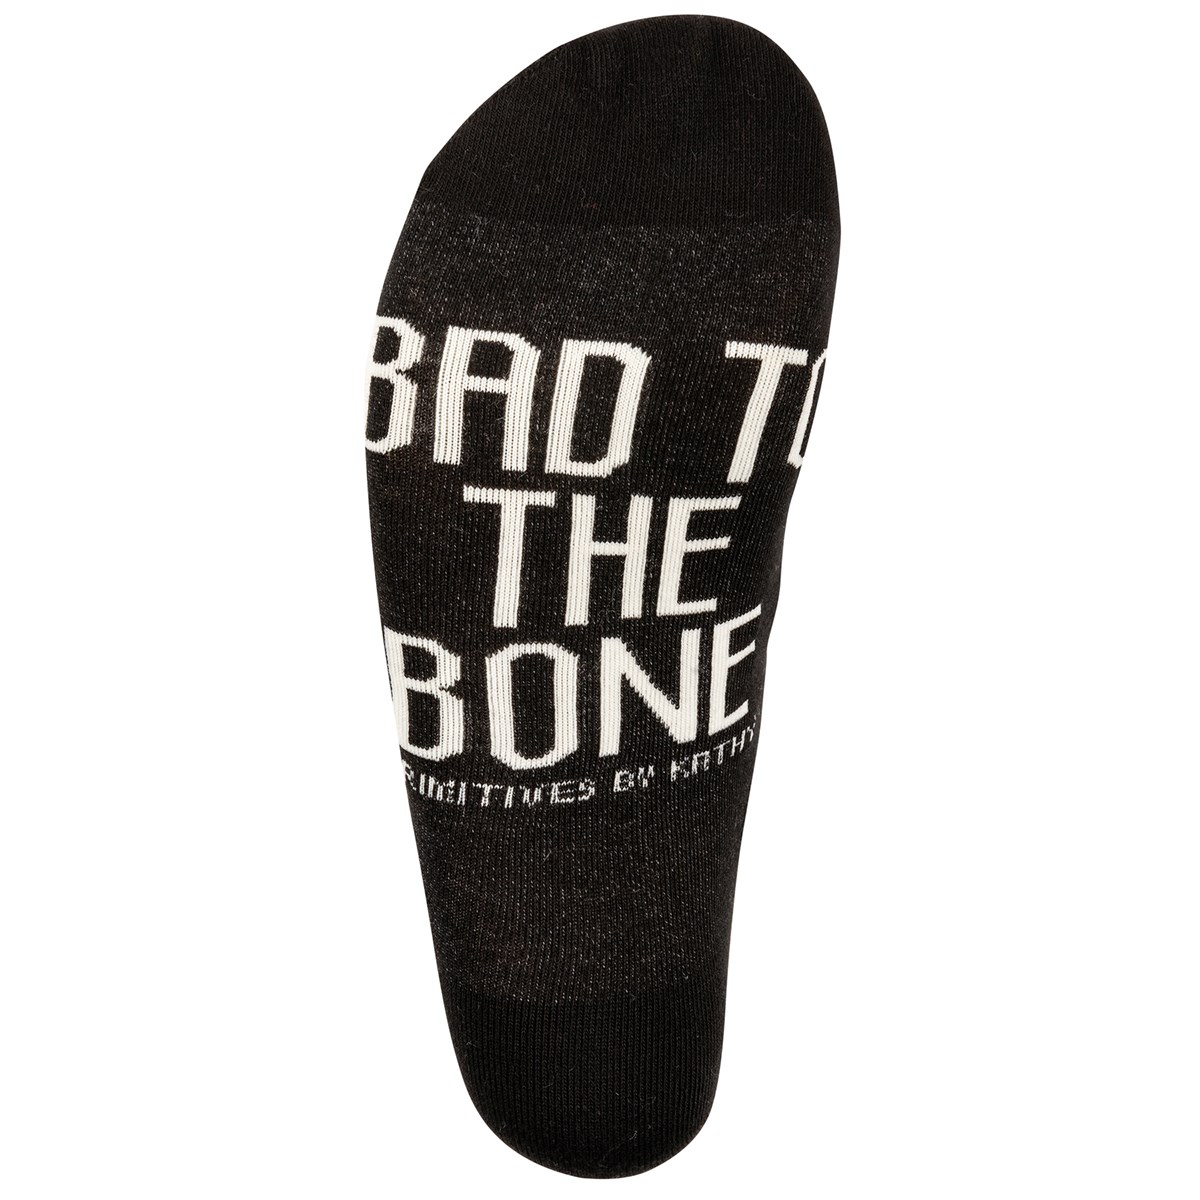 Bad To The Bone Socks - Cotton, Nylon, Spandex